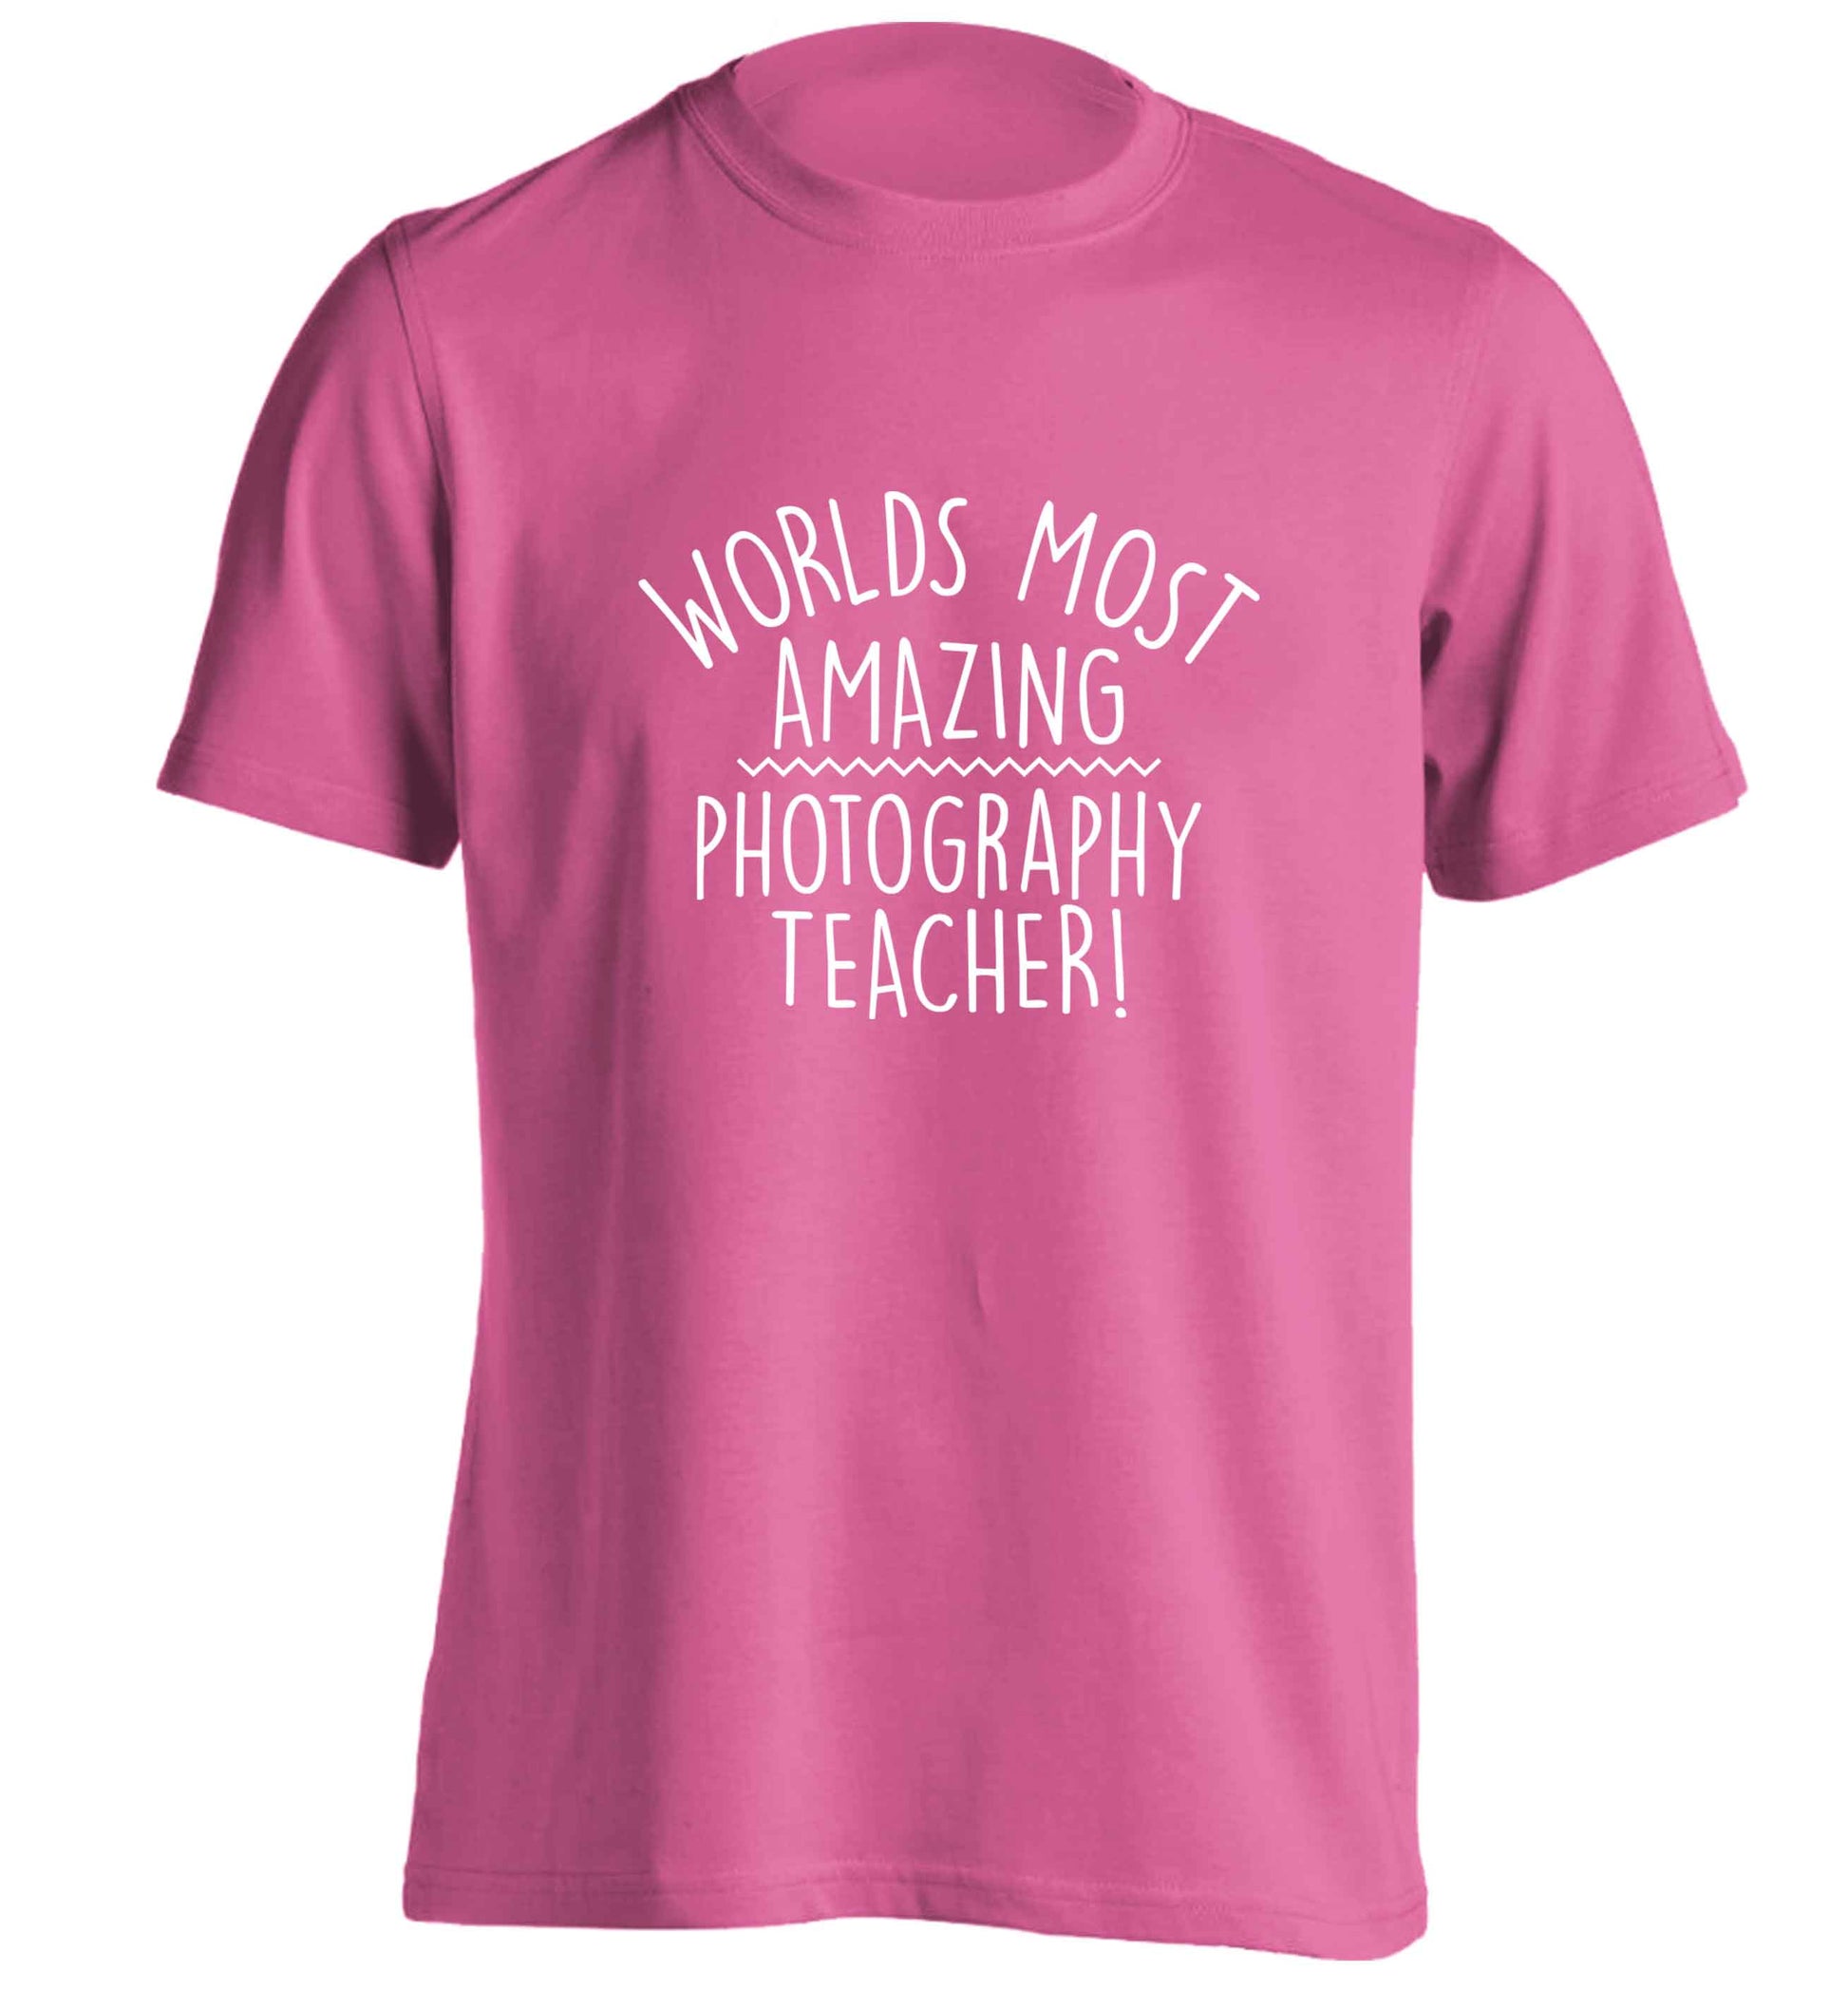 Worlds most amazing photography teacher adults unisex pink Tshirt 2XL